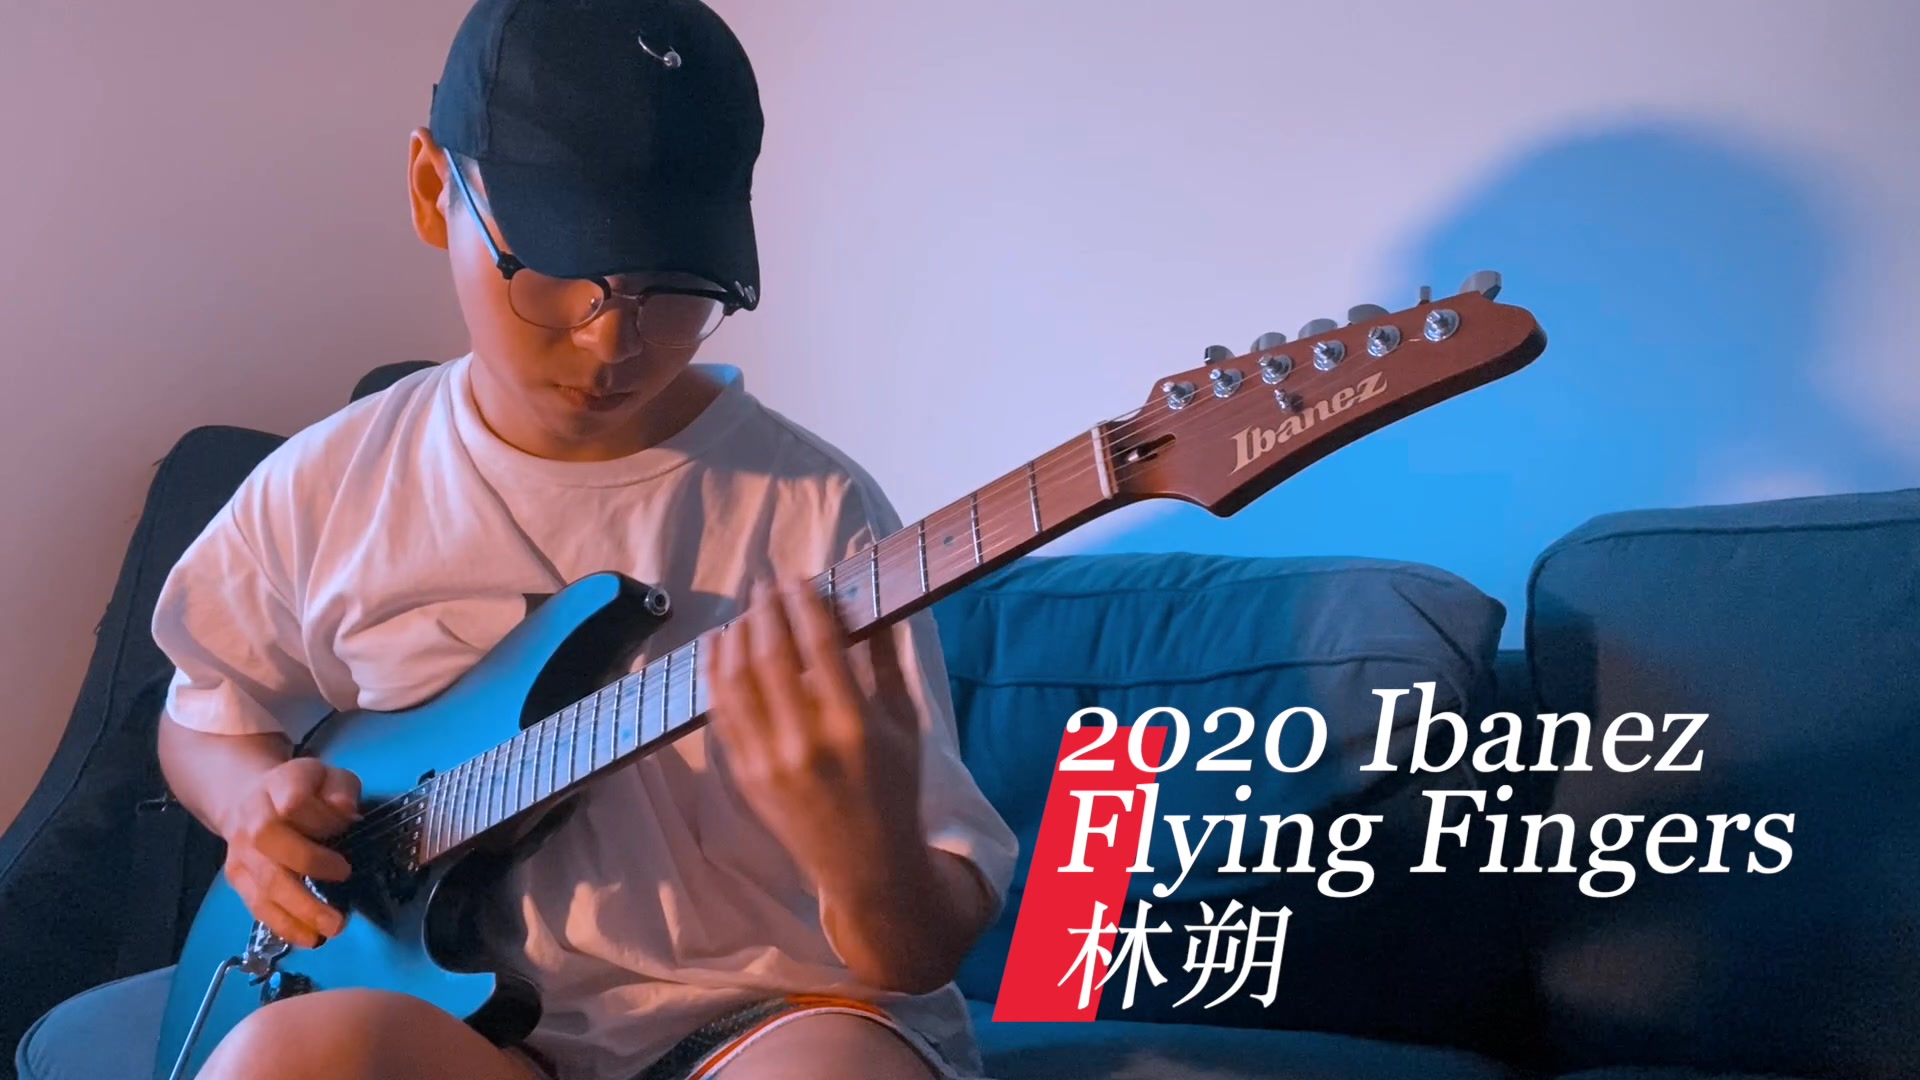 2020 Ibanez Flying Fingers吉他大赛-林朔